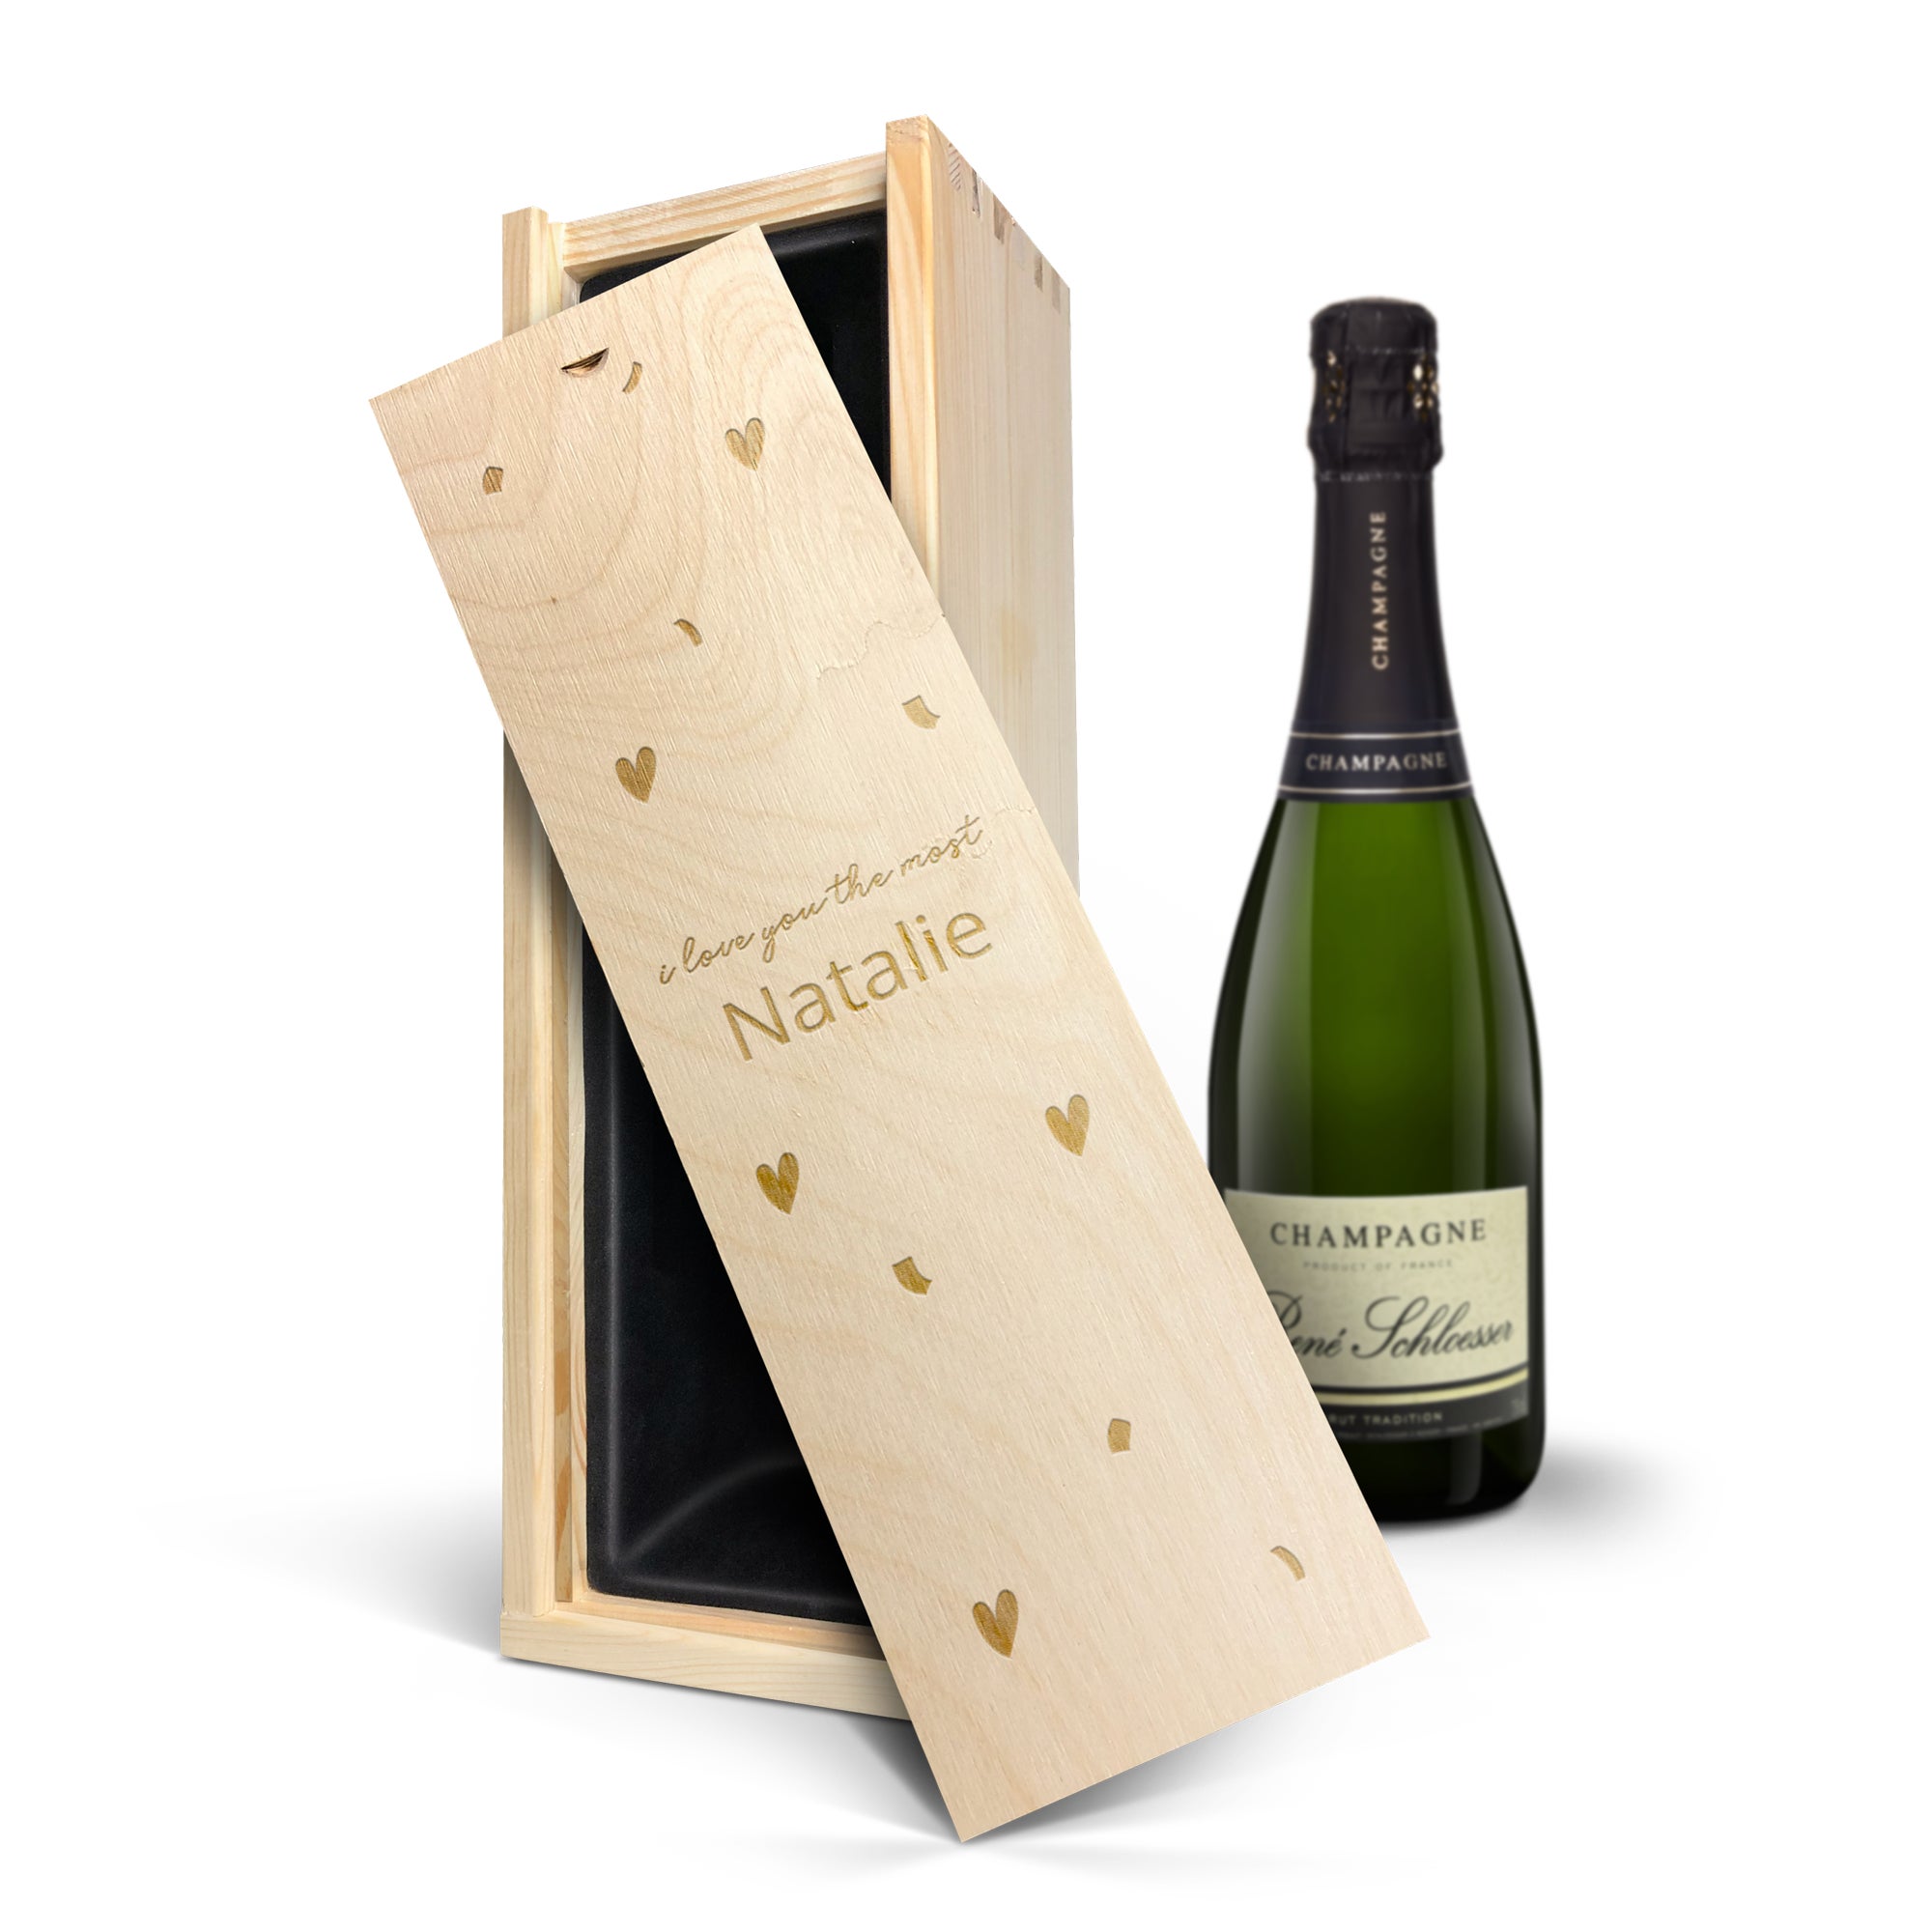 Champagne in gegraveerde kist - René Schloesser (750ml)